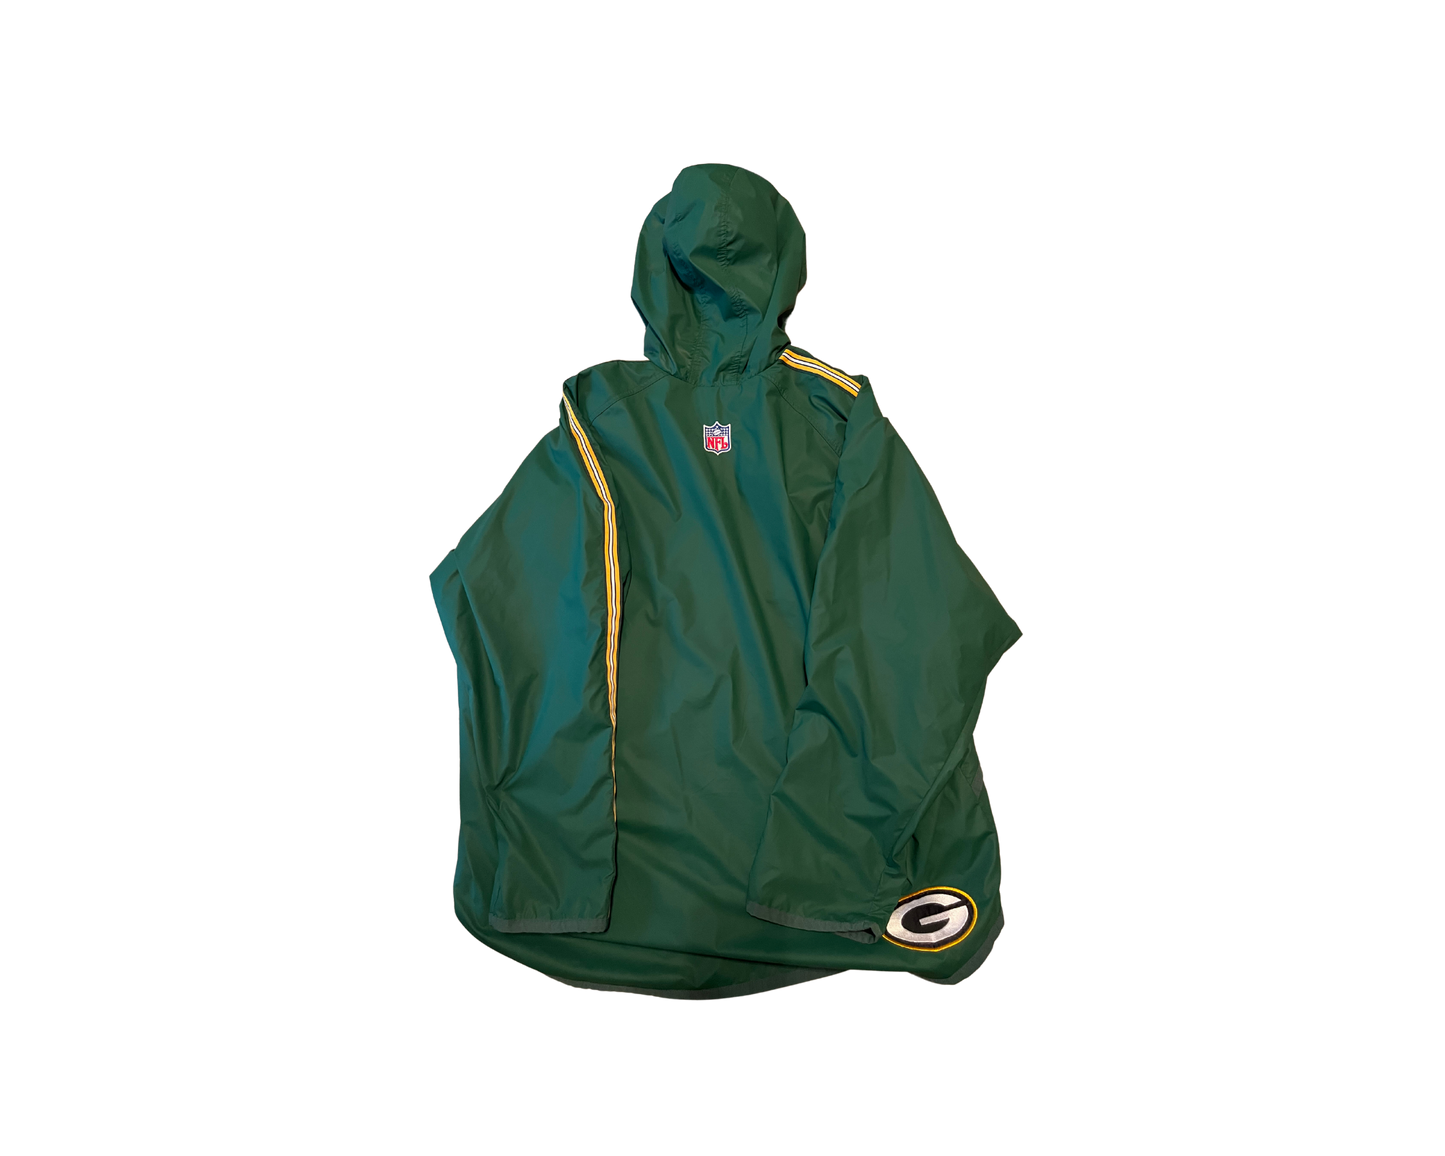 NFL Authentic Pro Line Zip "Packers" Jacket